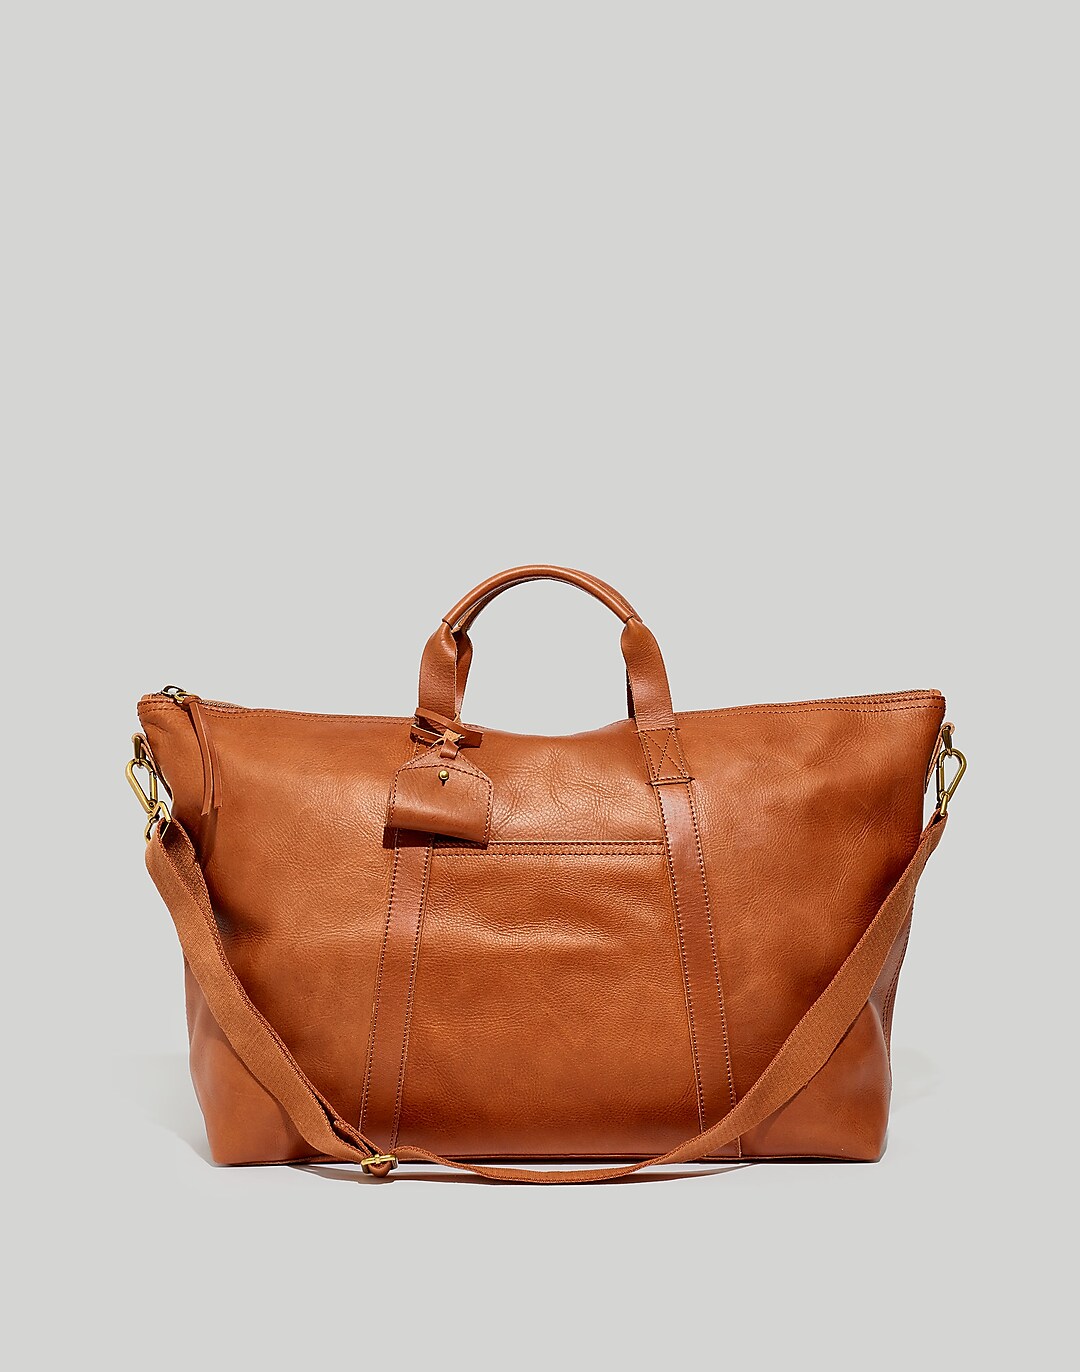 Madewell Essentials EW Tote Handbag